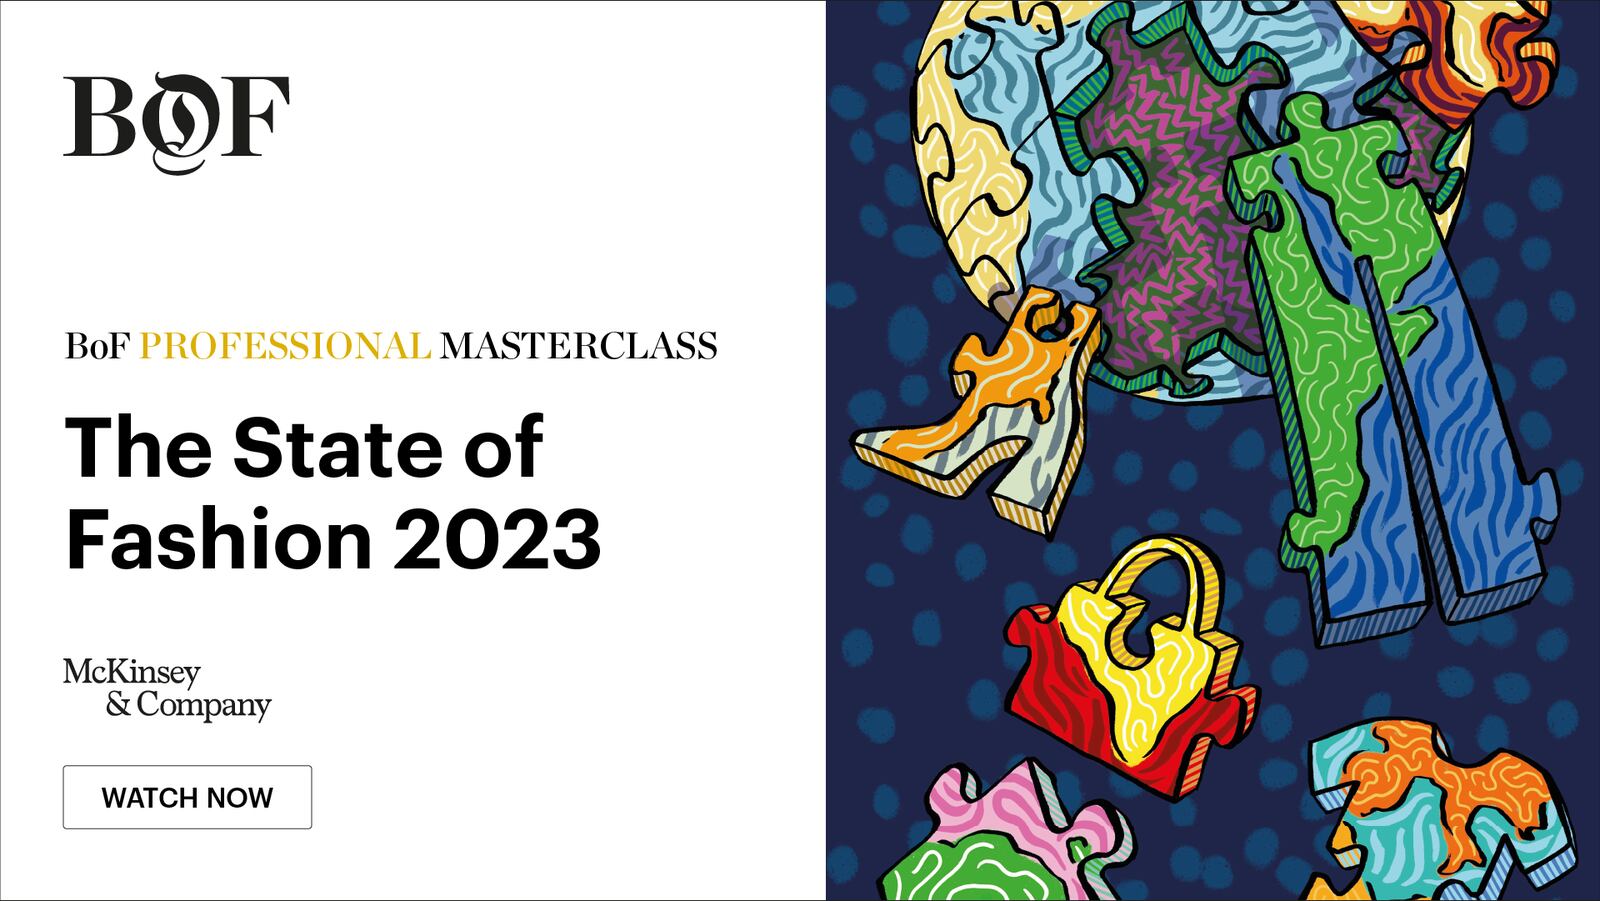 BoF Professional Masterclass The State of Fashion 2023